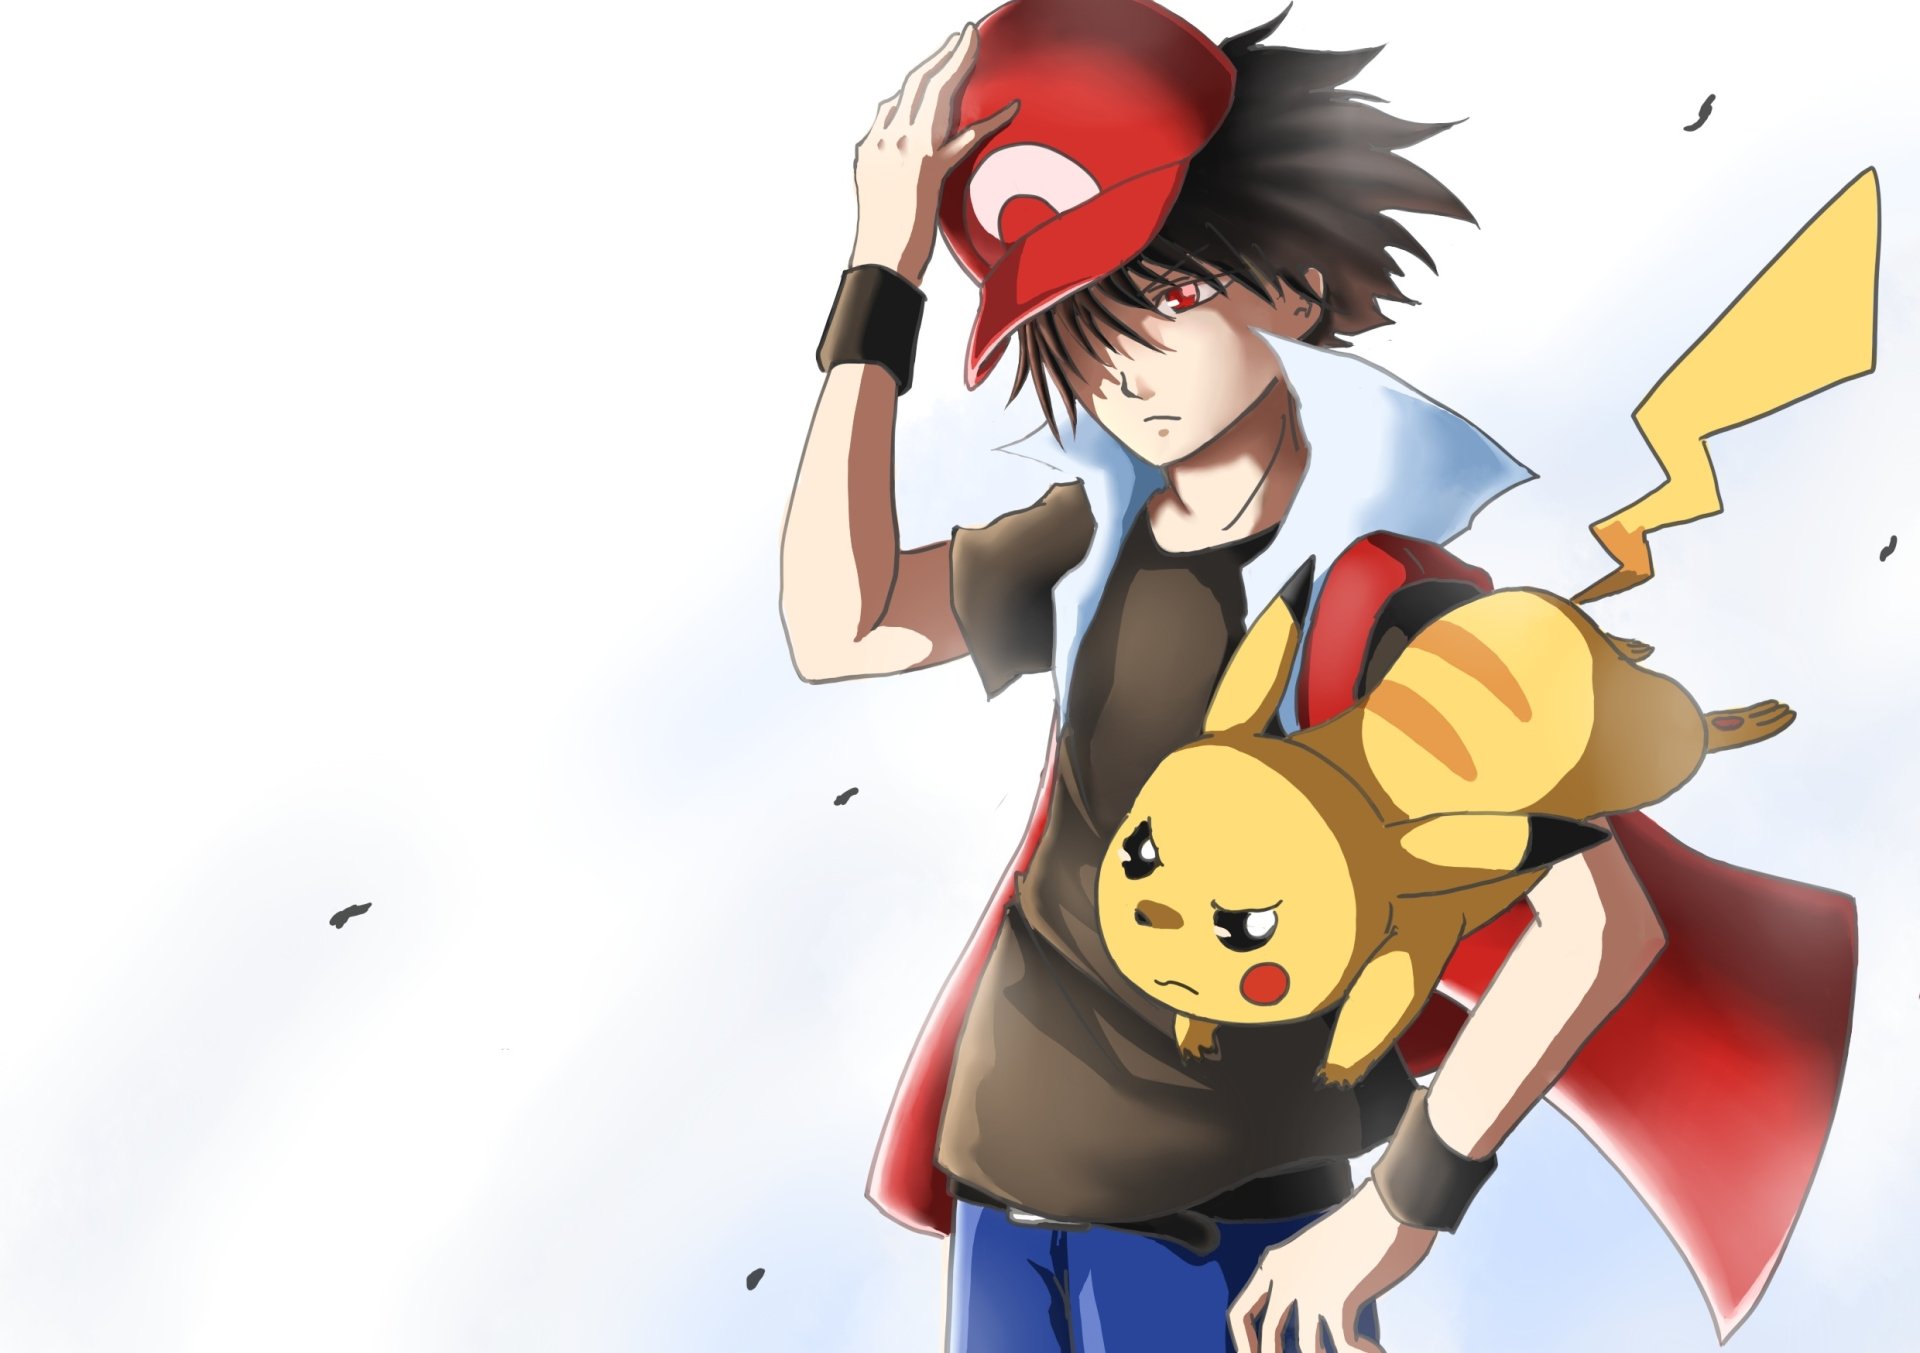 Pokemon Red & Pikachu Trainer Wallpaper, ift.tt/2kxSY4q via…